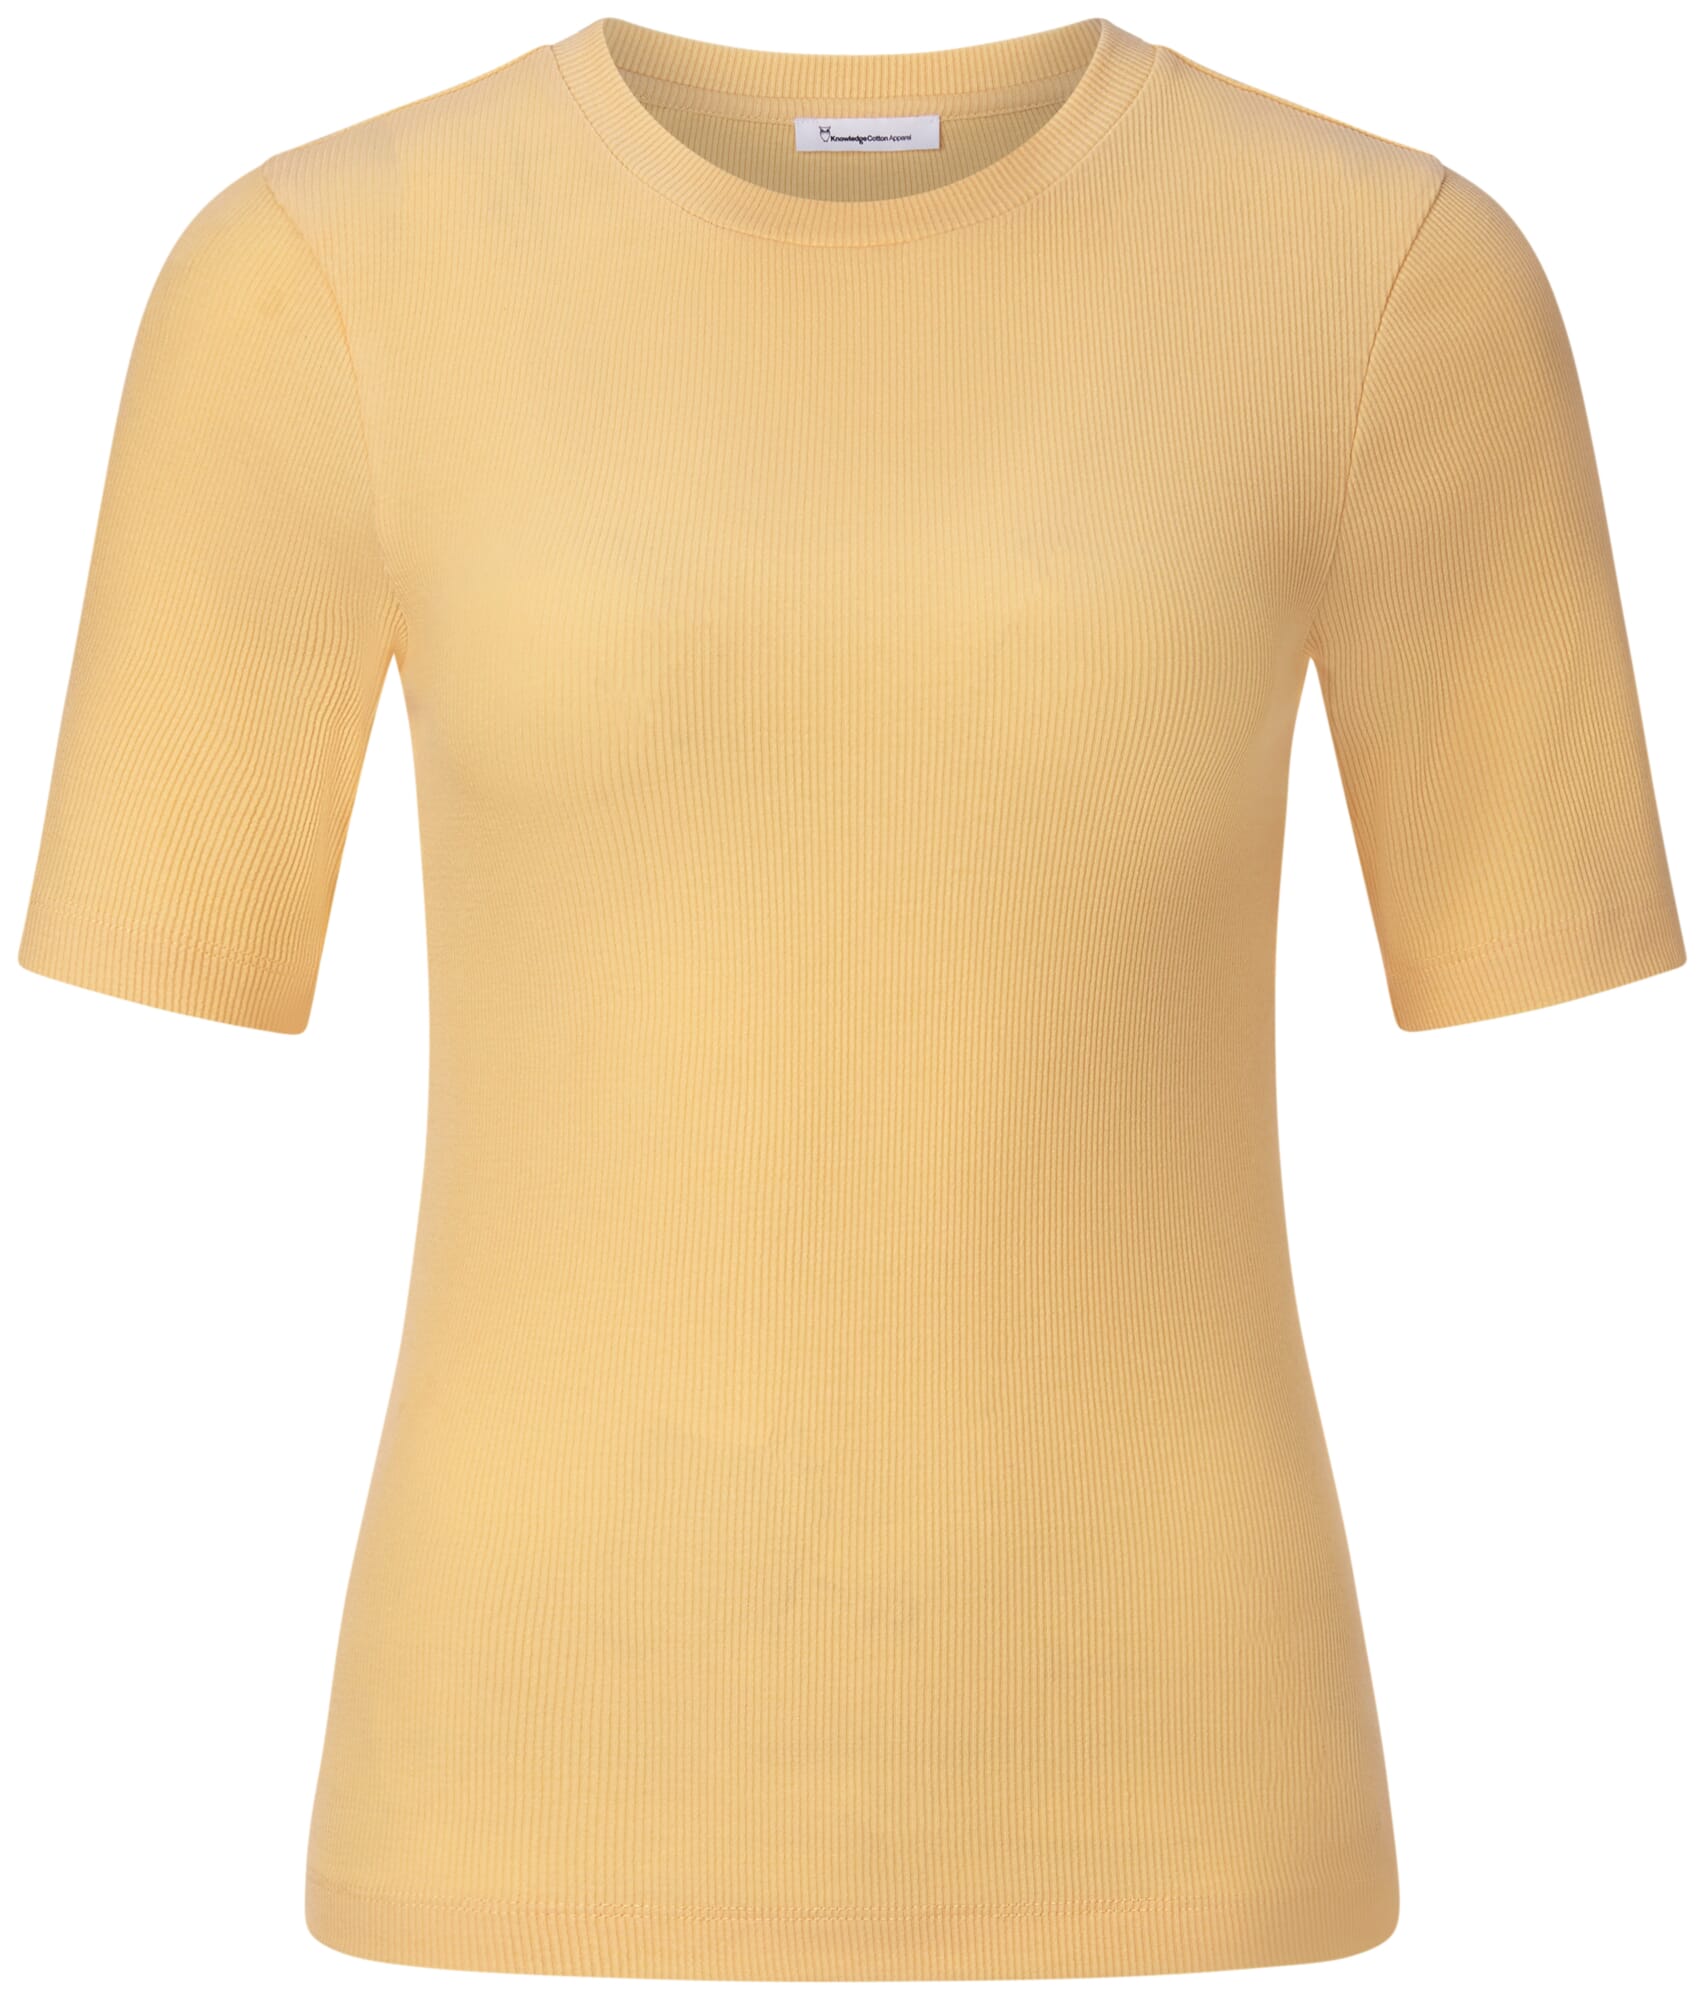 Yellow ribbed Ladies\' | Manufactum T-shirt,